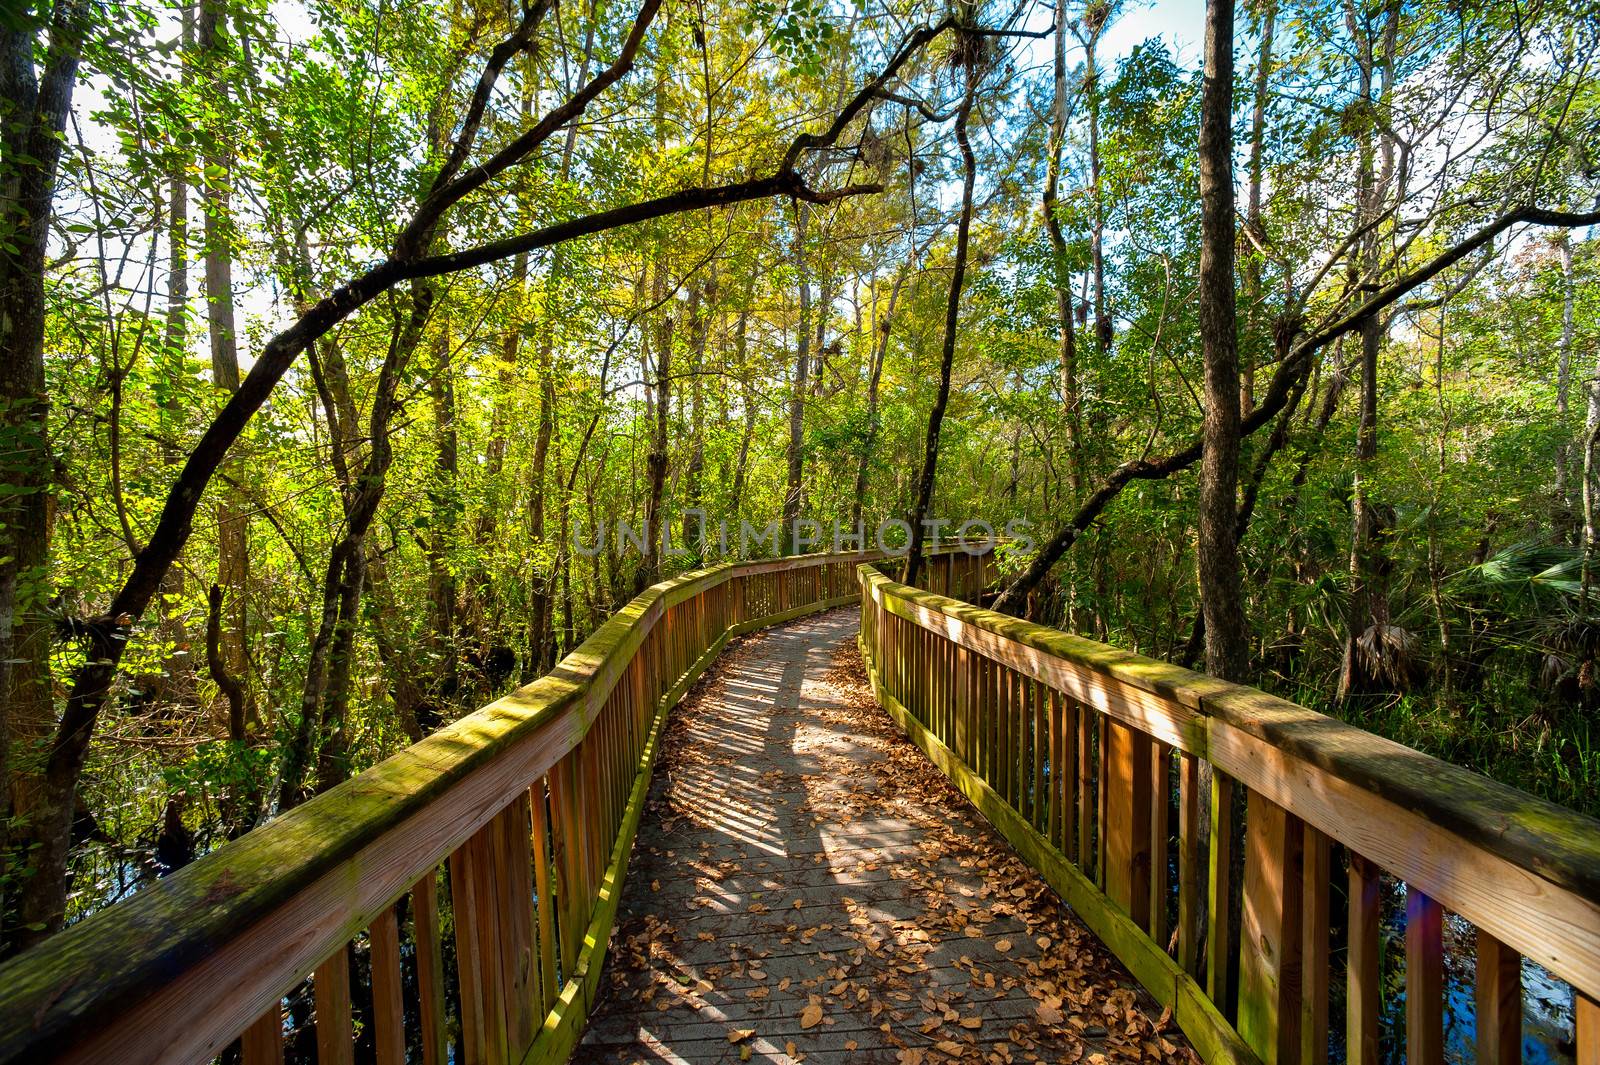 Wooden bridge in a forest, Kirby Storter Roadside Park, Ochopee, Collier County, Florida, USA